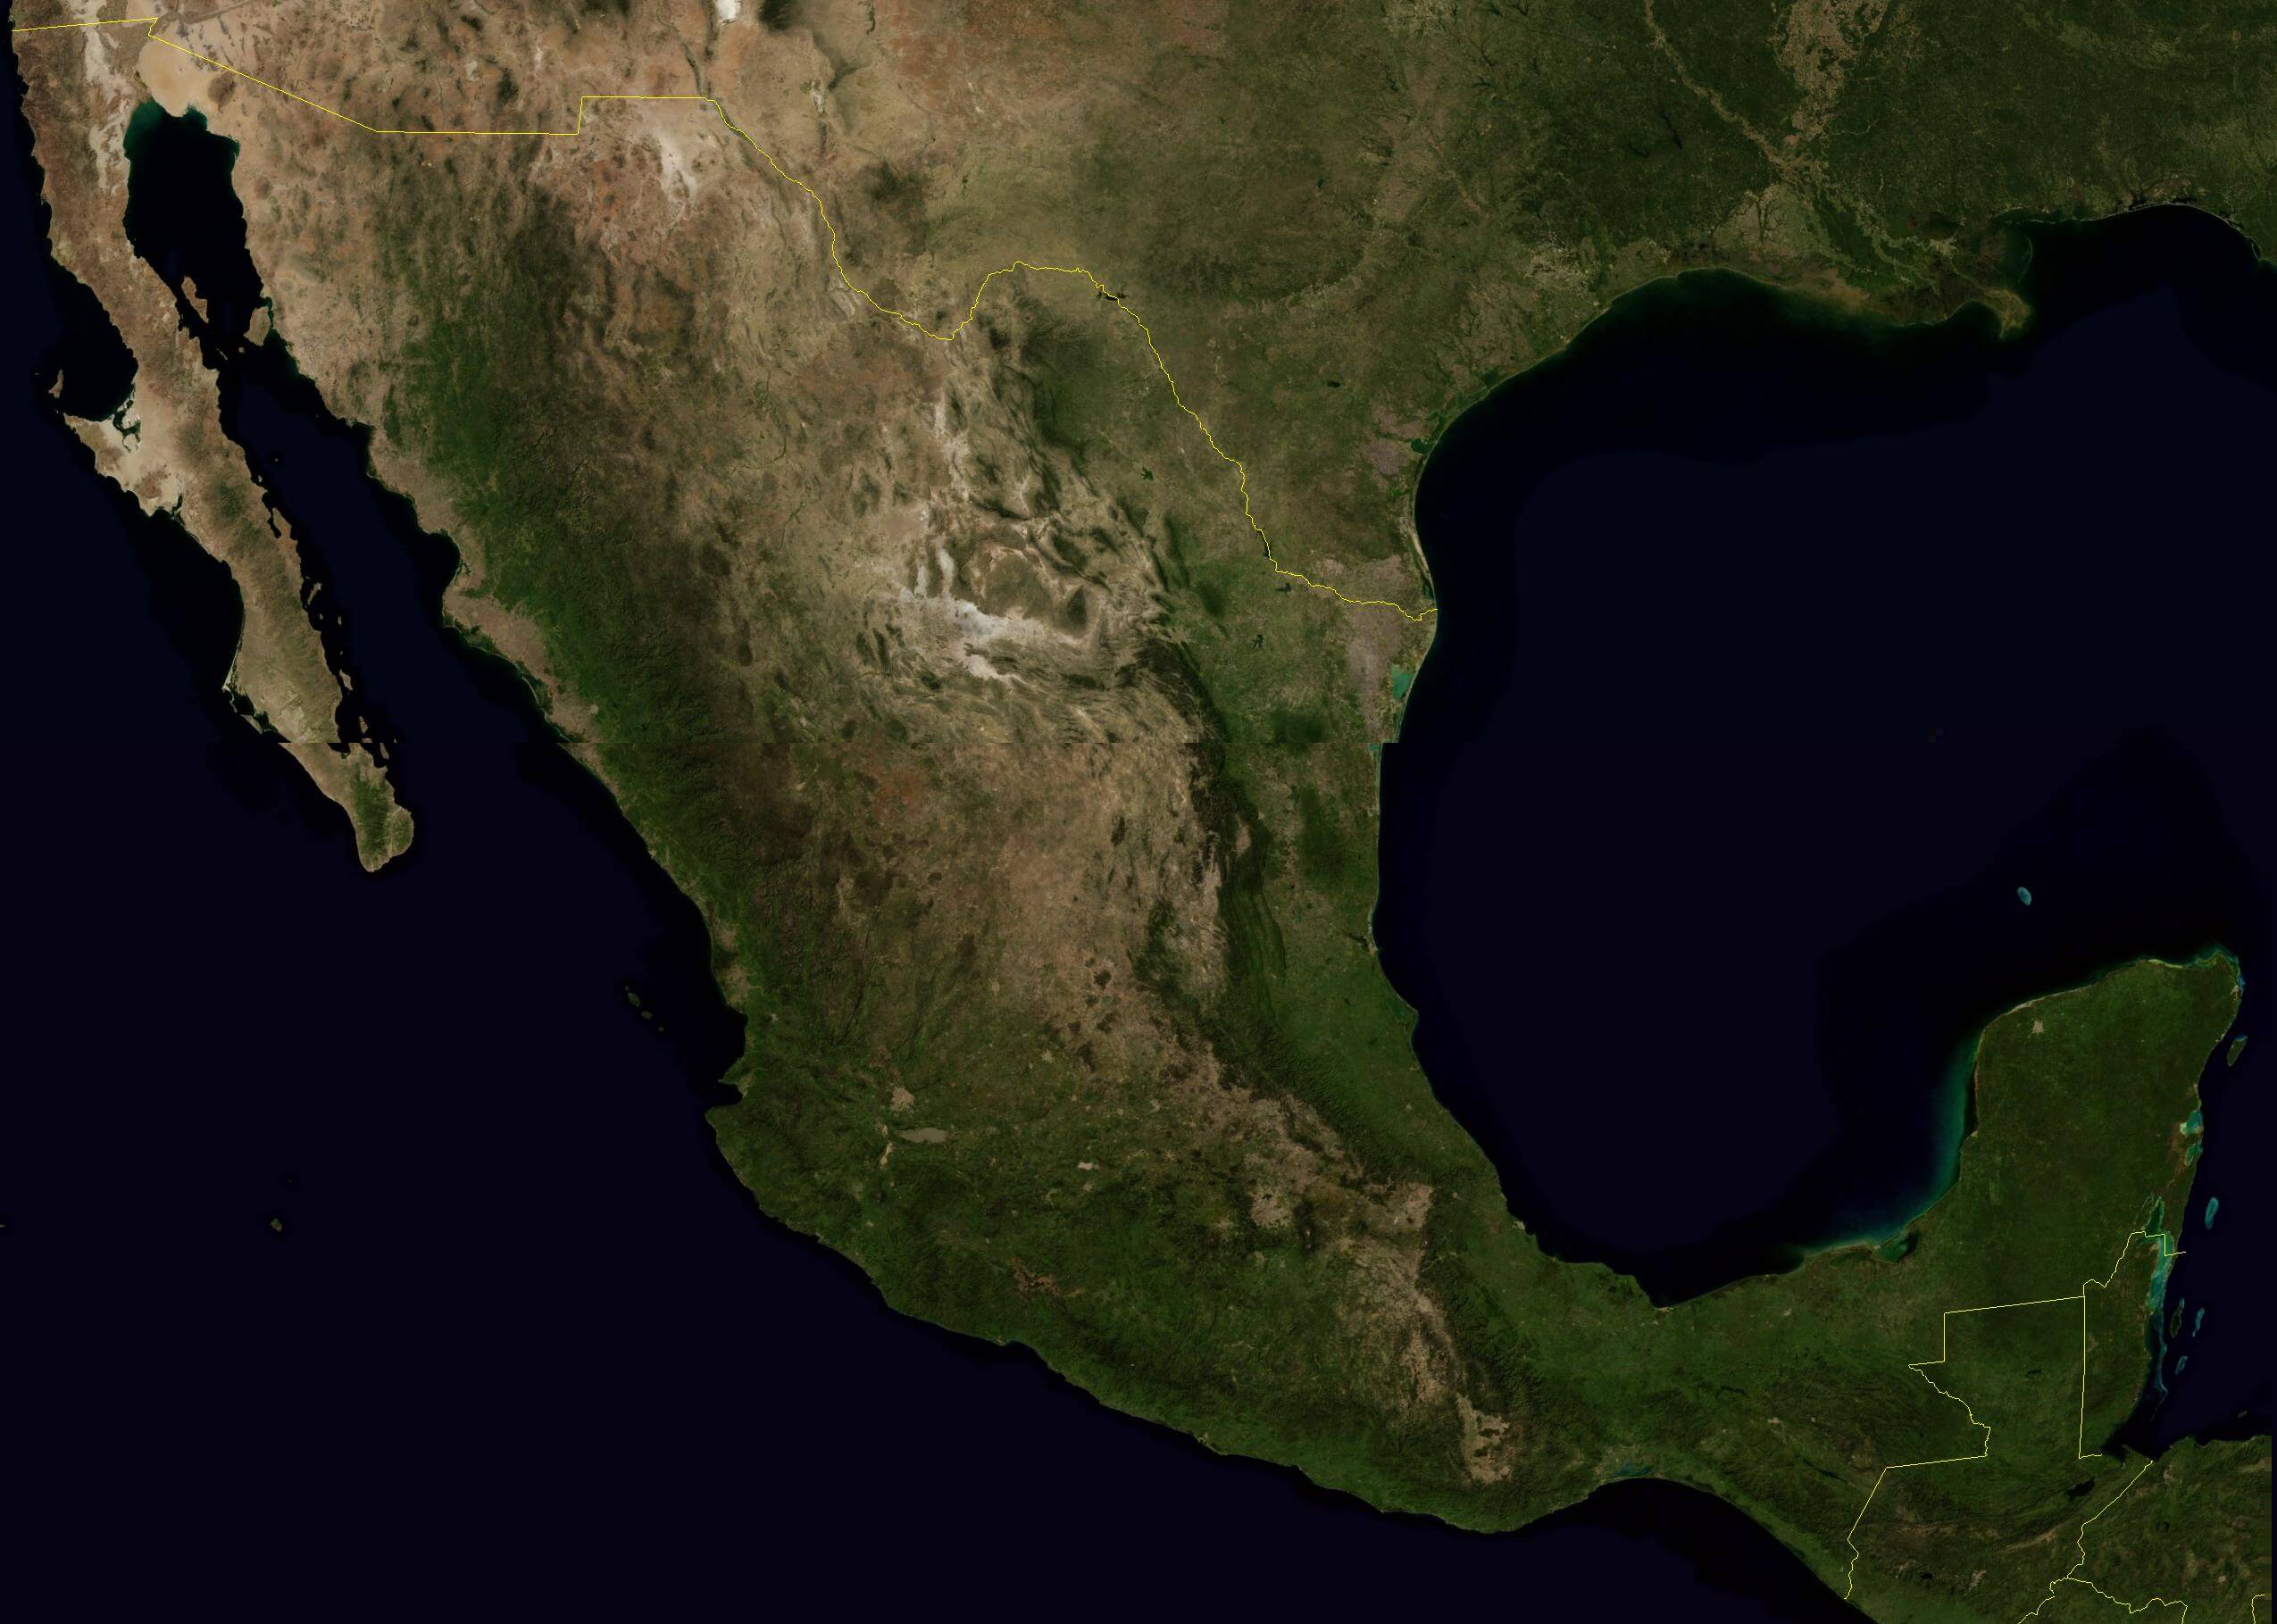 satellit bild von mexiko 2004